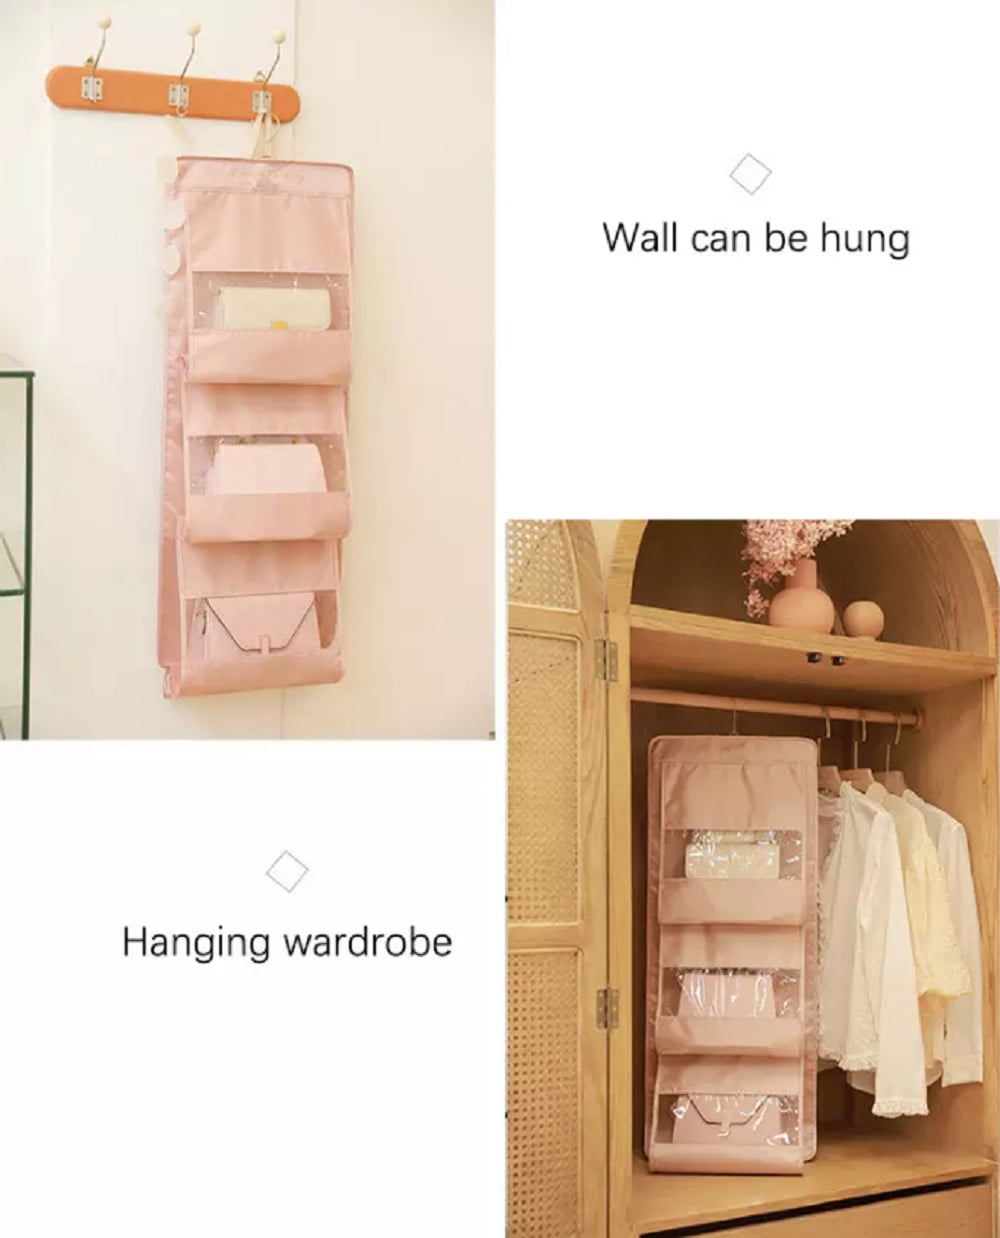 6/8 Pocket Room Hanging Handbag Organizer Wardrobe Closet Clear Storage Bag  Home